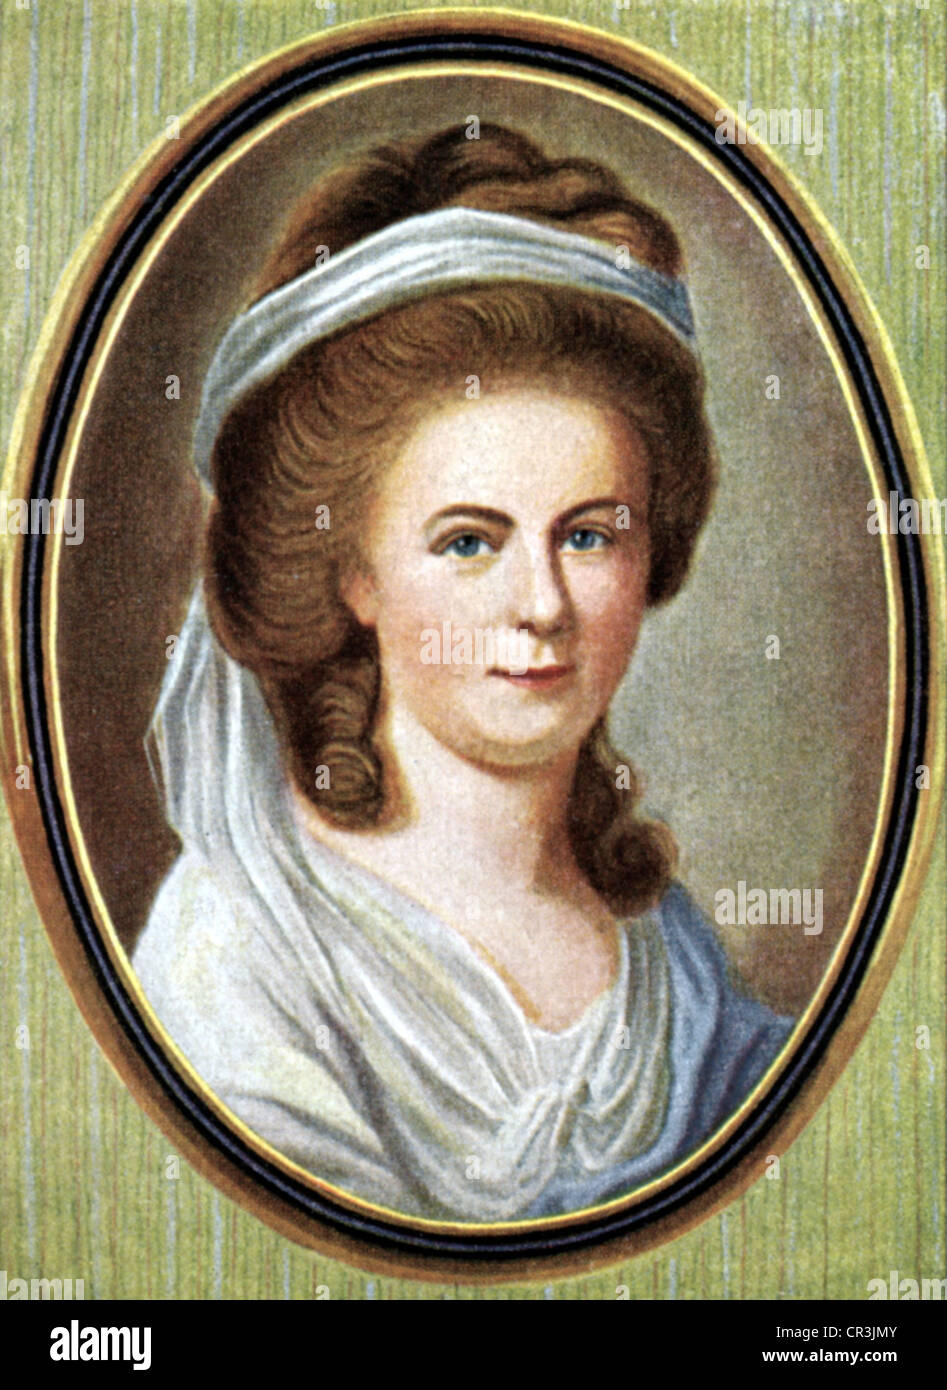 Kestner, Charlotte, 11.1.1743 - 16.1.1828, lover of Johann Wolfgang von Goethe, portrait, print after contemporary miniature, Stock Photo